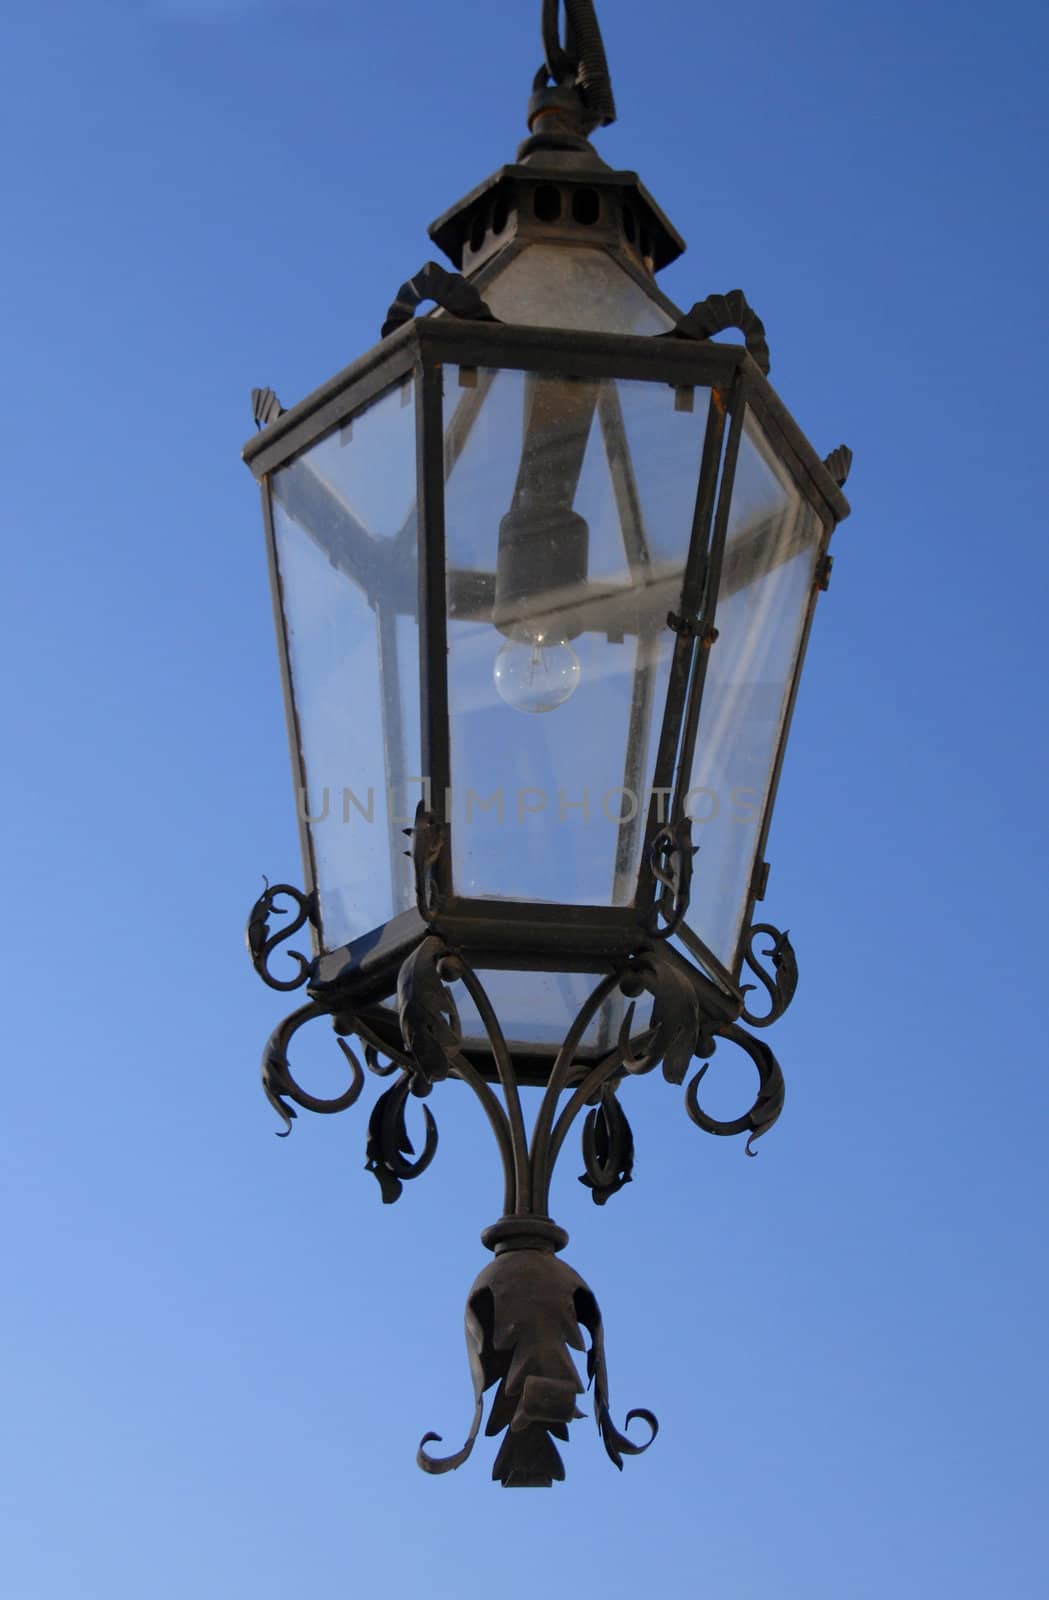 The old, off the lamp on a blue sky. by wojciechkozlowski